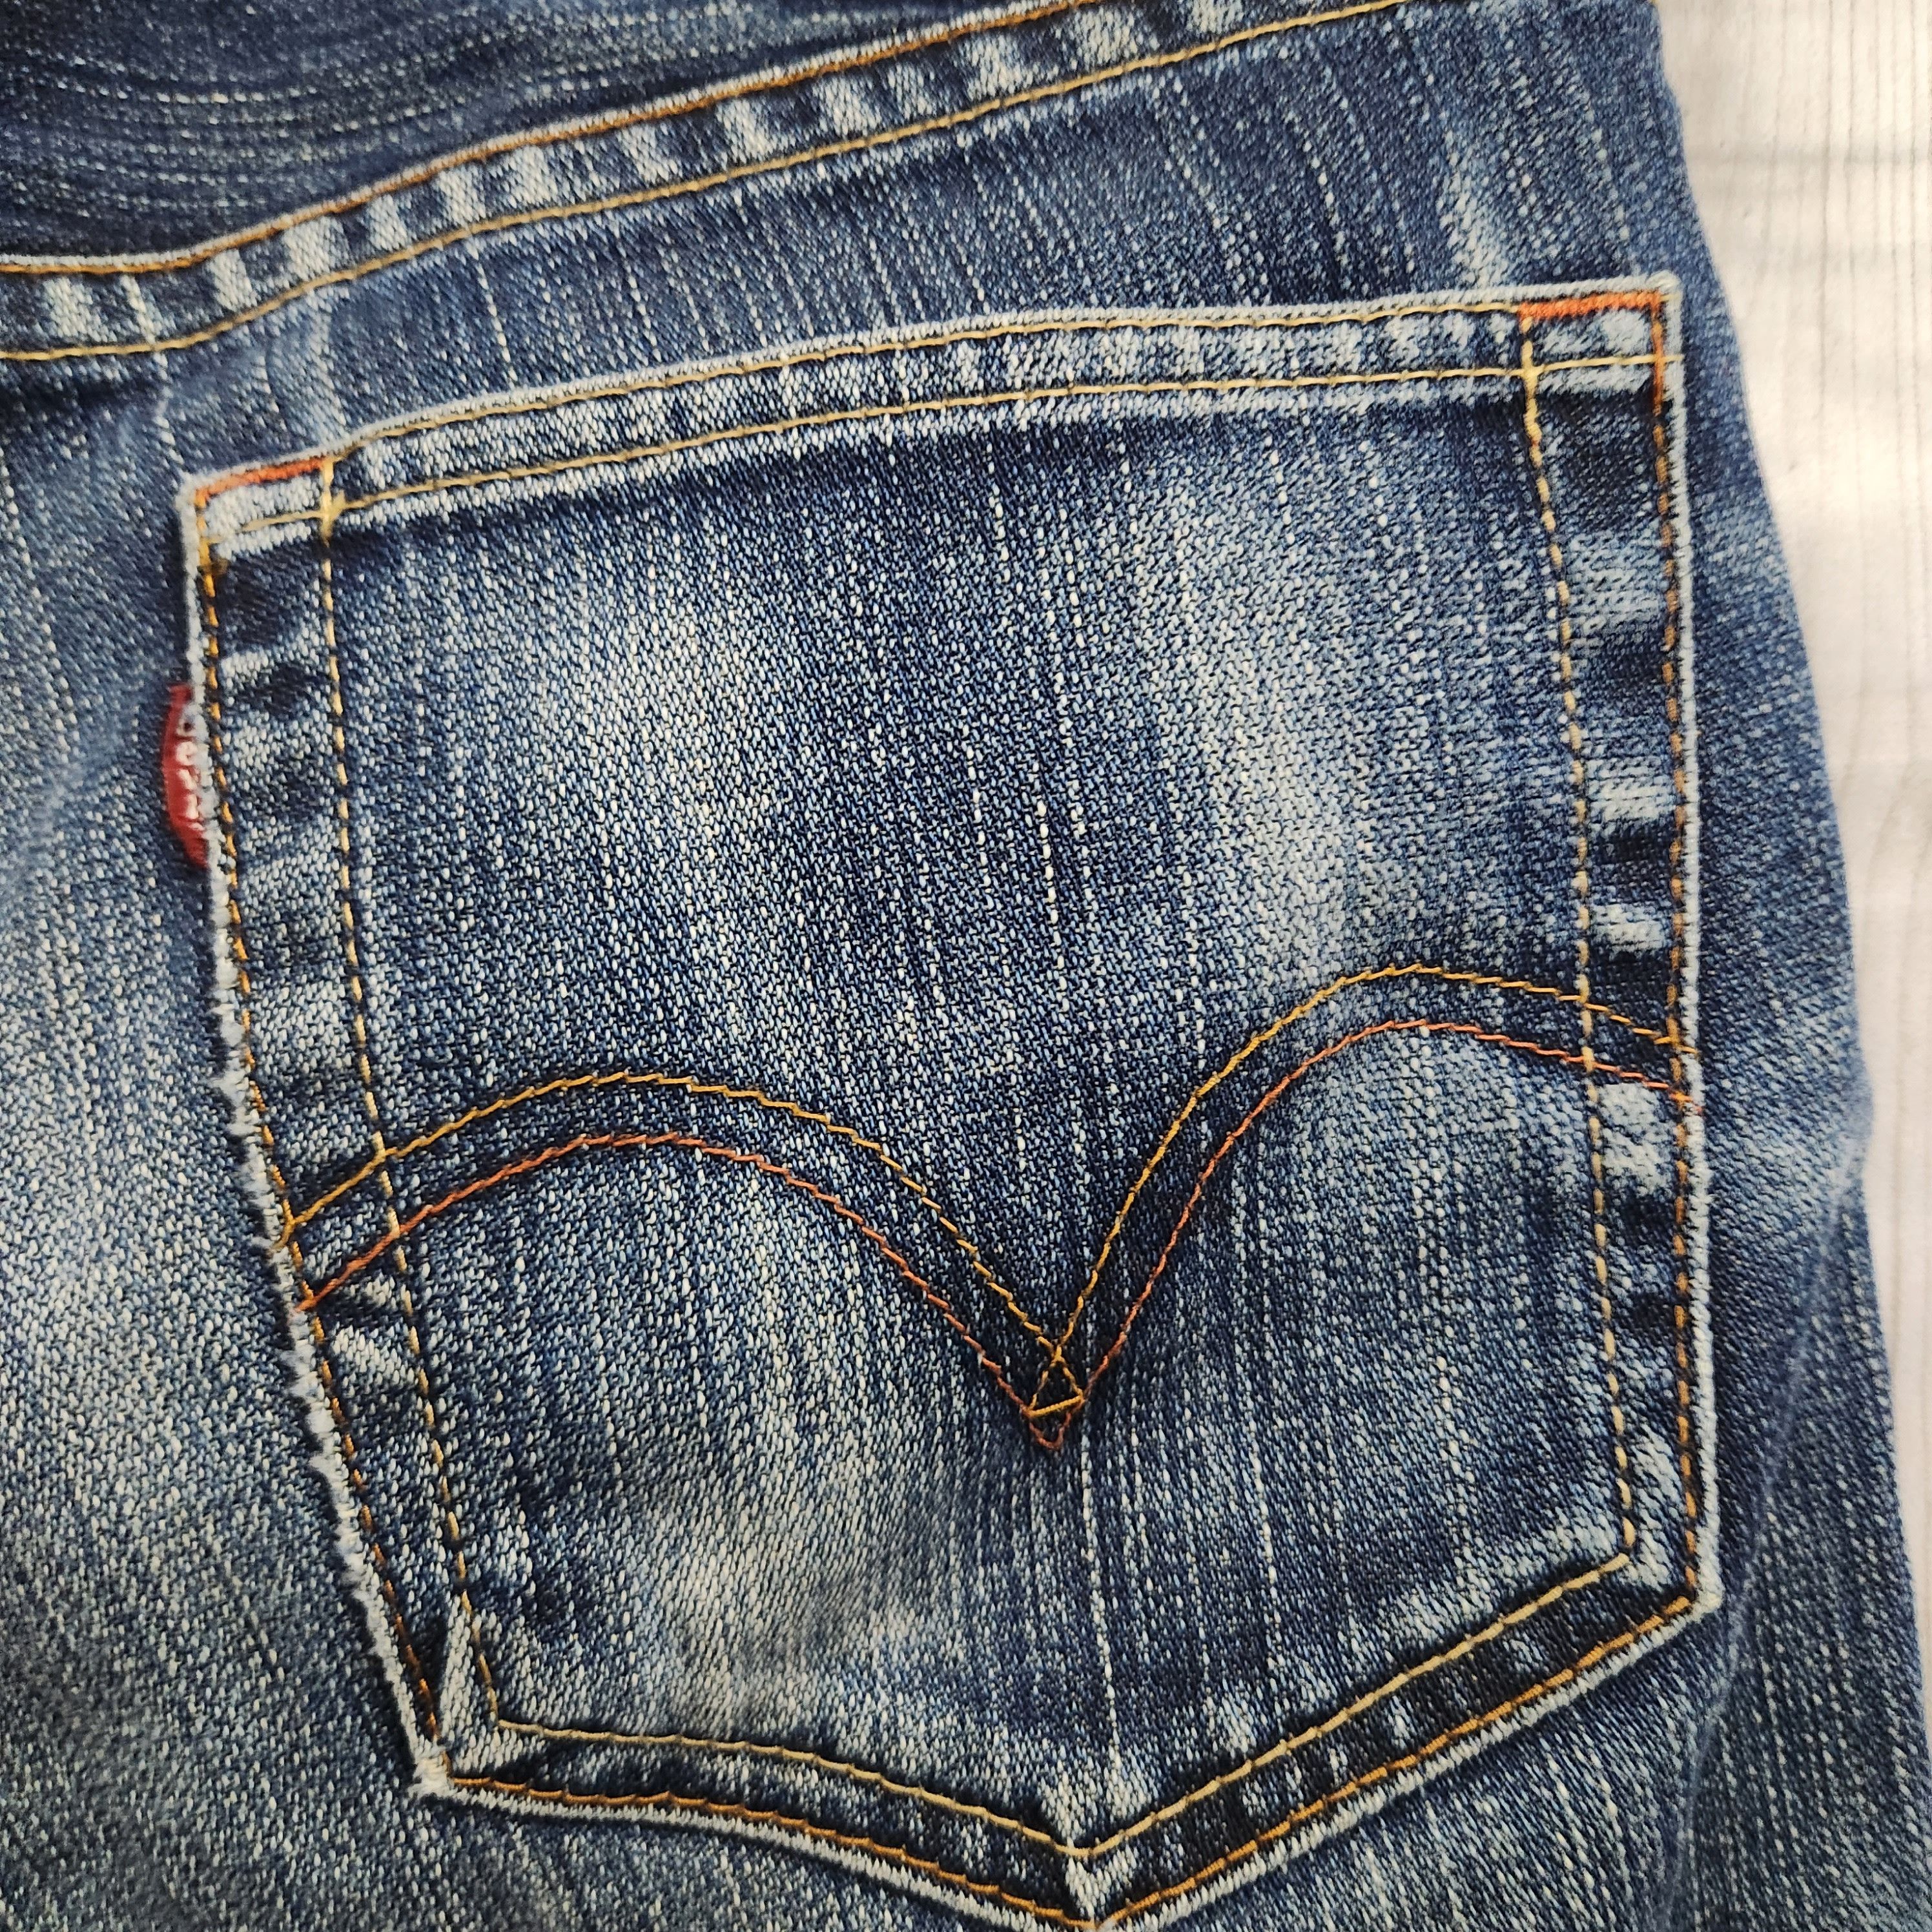 Vintage Levis 517 Premium Denim Jeans Year 2006 - 14